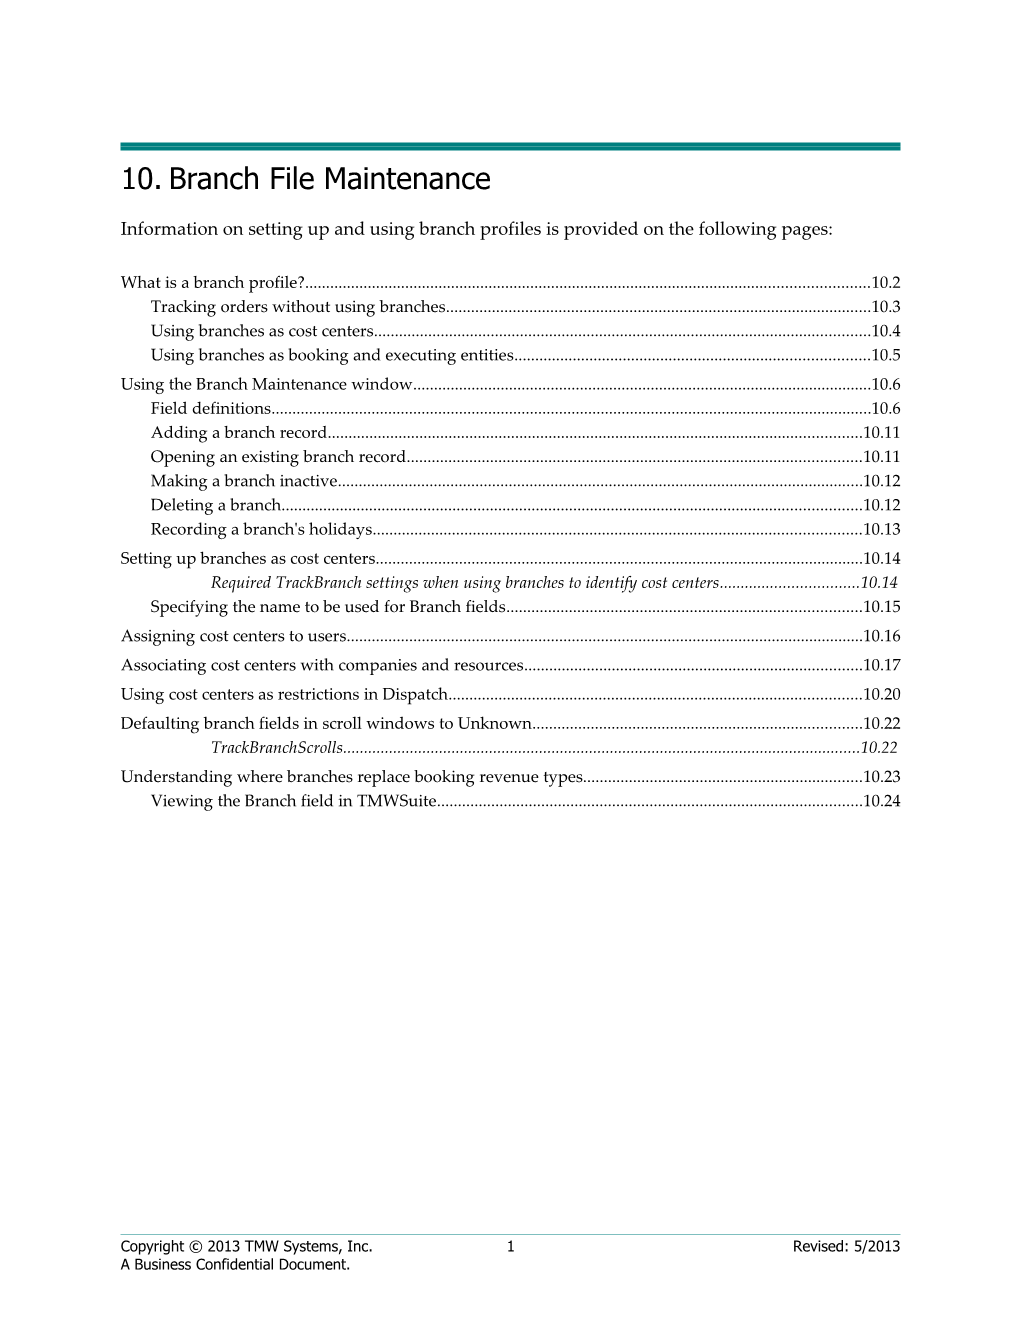 Branch File Maintenance